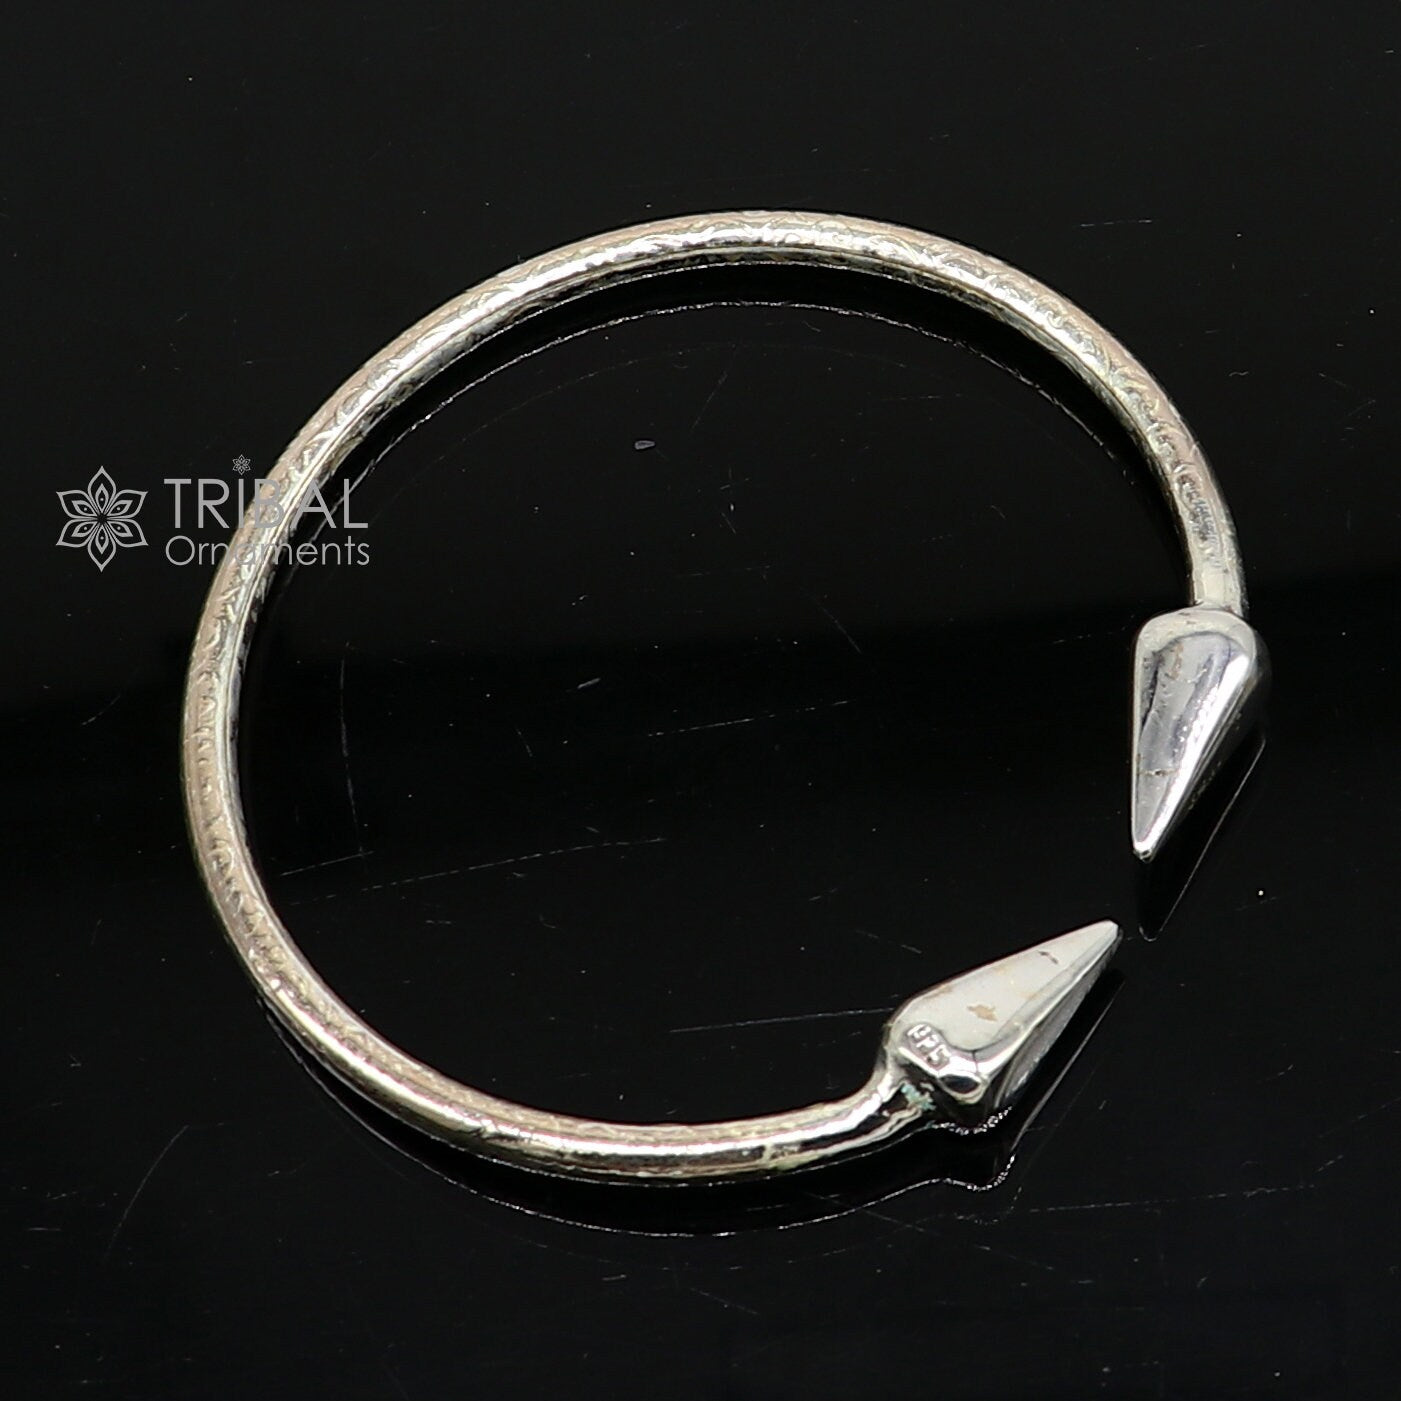 925 sterling silver vintage antique Unique stylish design handmade  adjustable cuff bangle bracelet kada unisex men's/girl's jewelry nsk738  TRIBAL ORNAMENTS